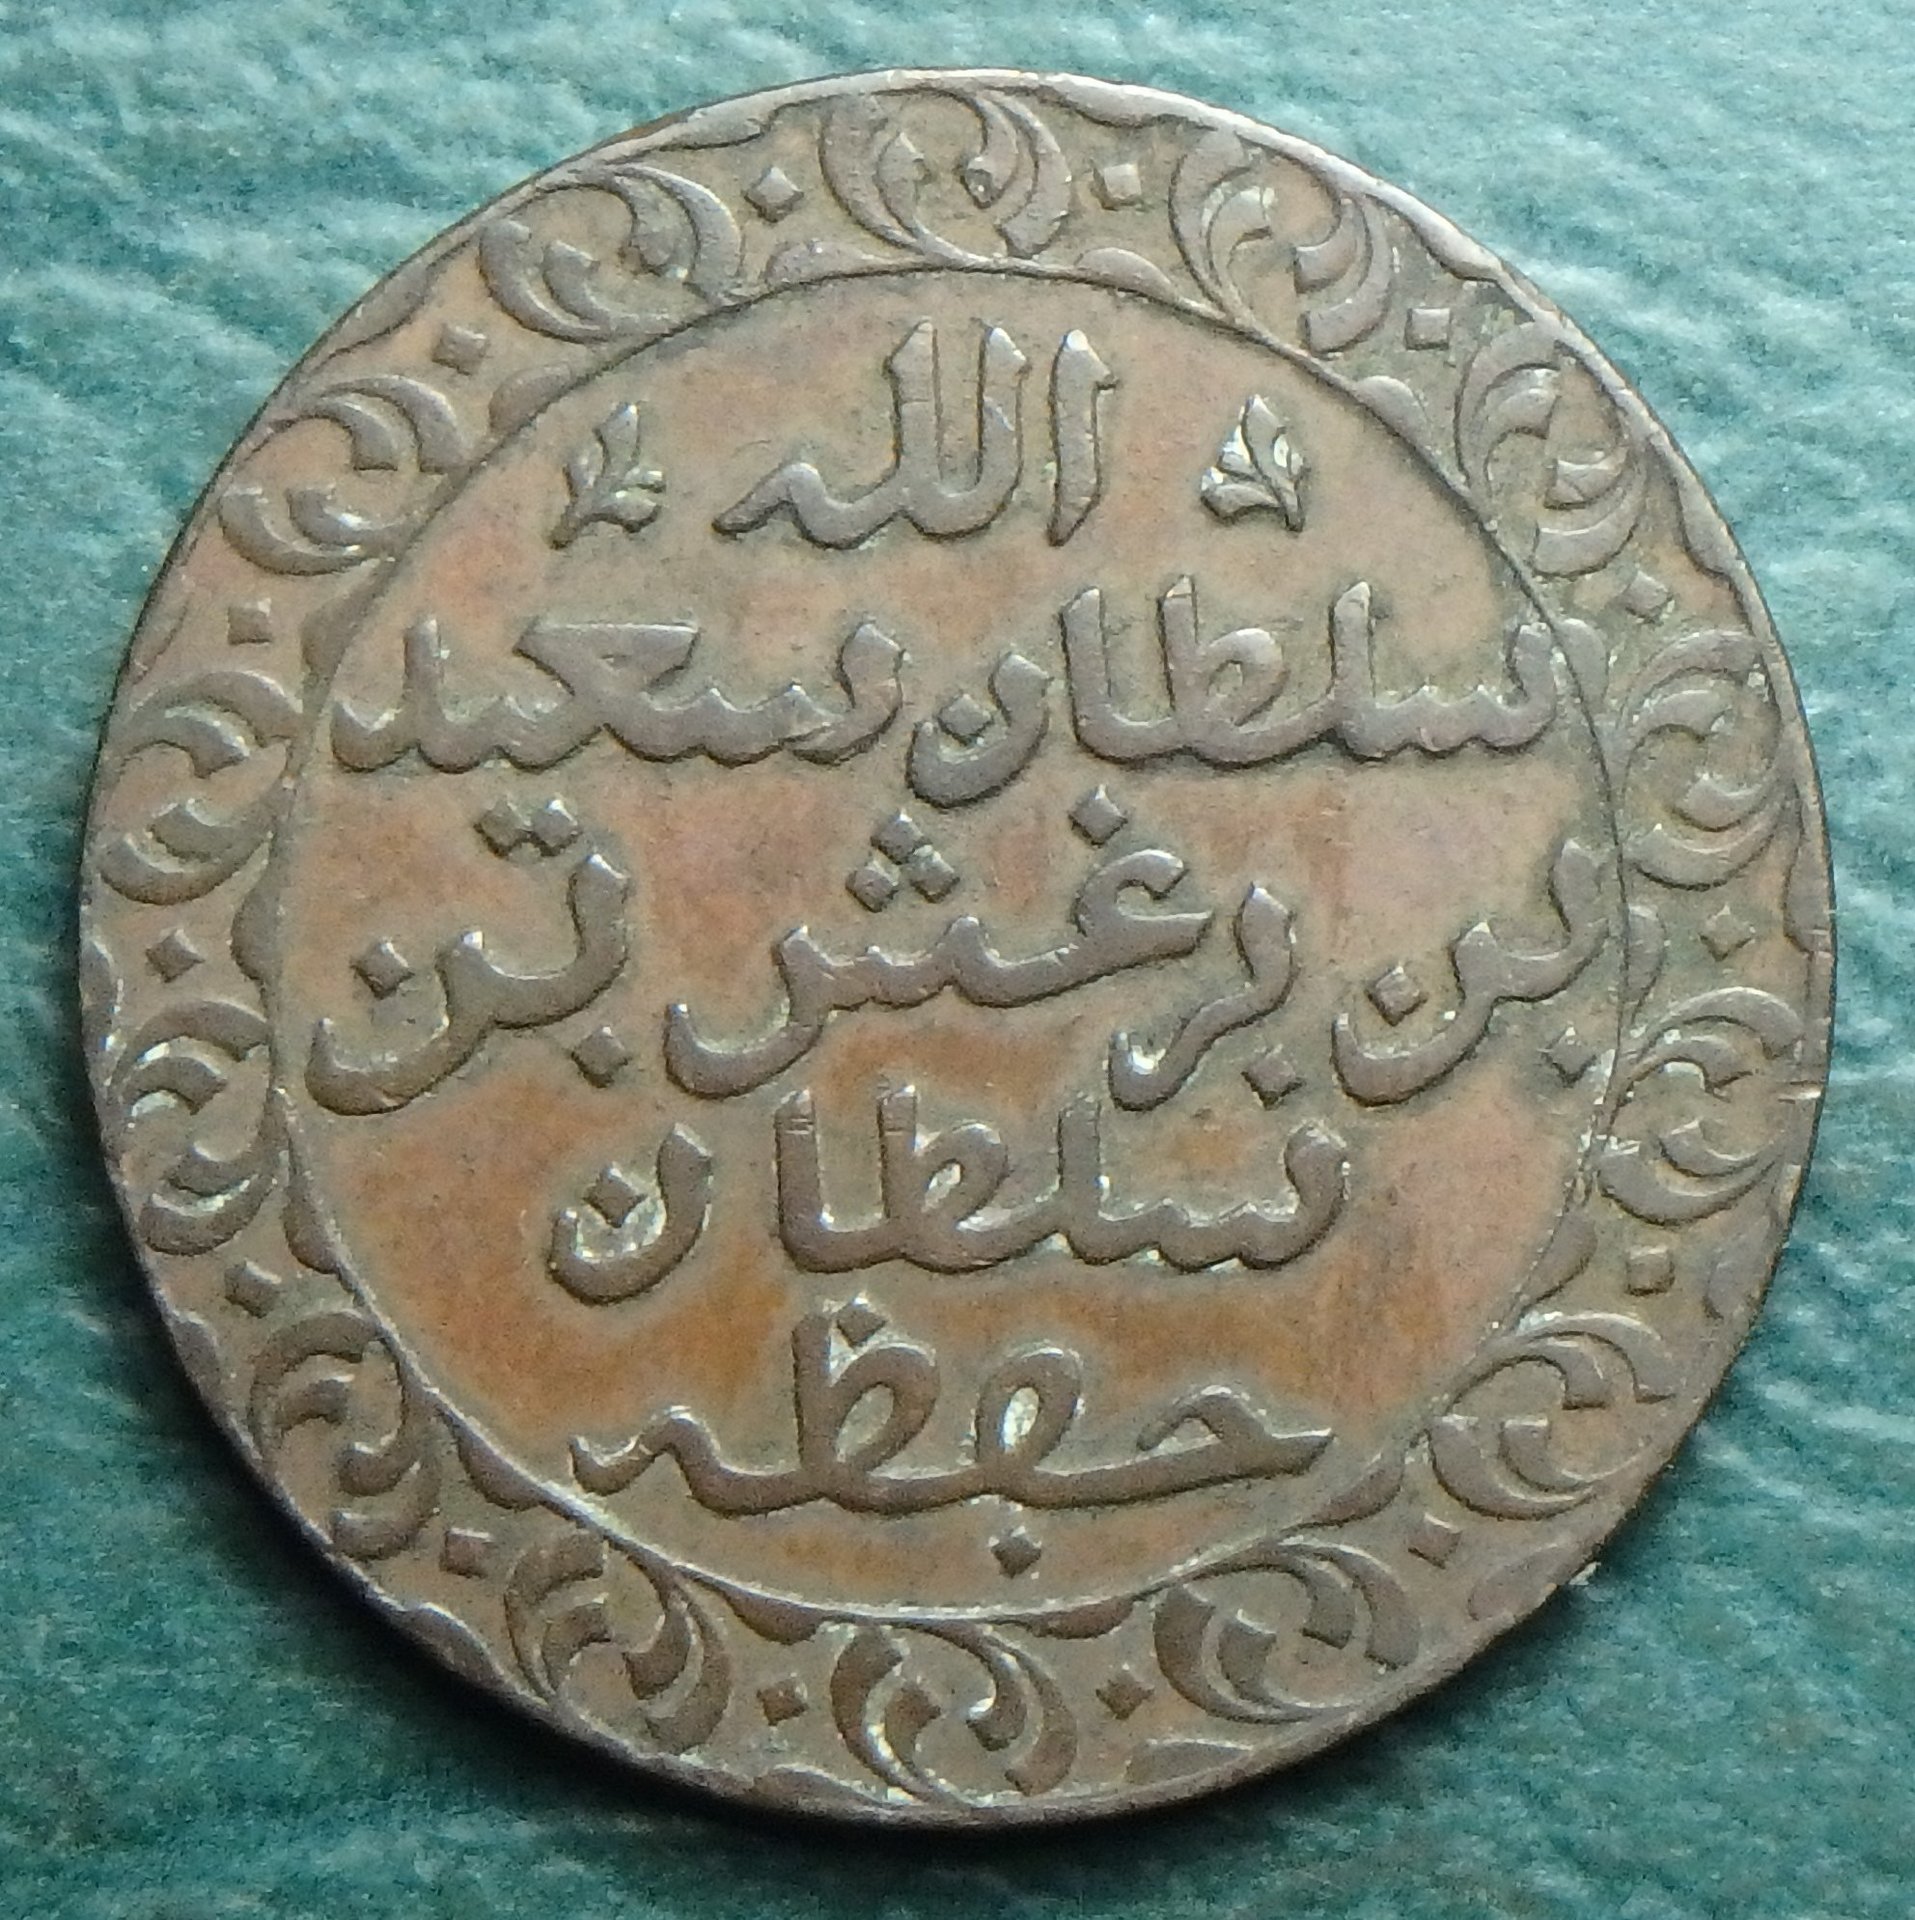 1882 Zanzibar 1 p obv (2).JPG